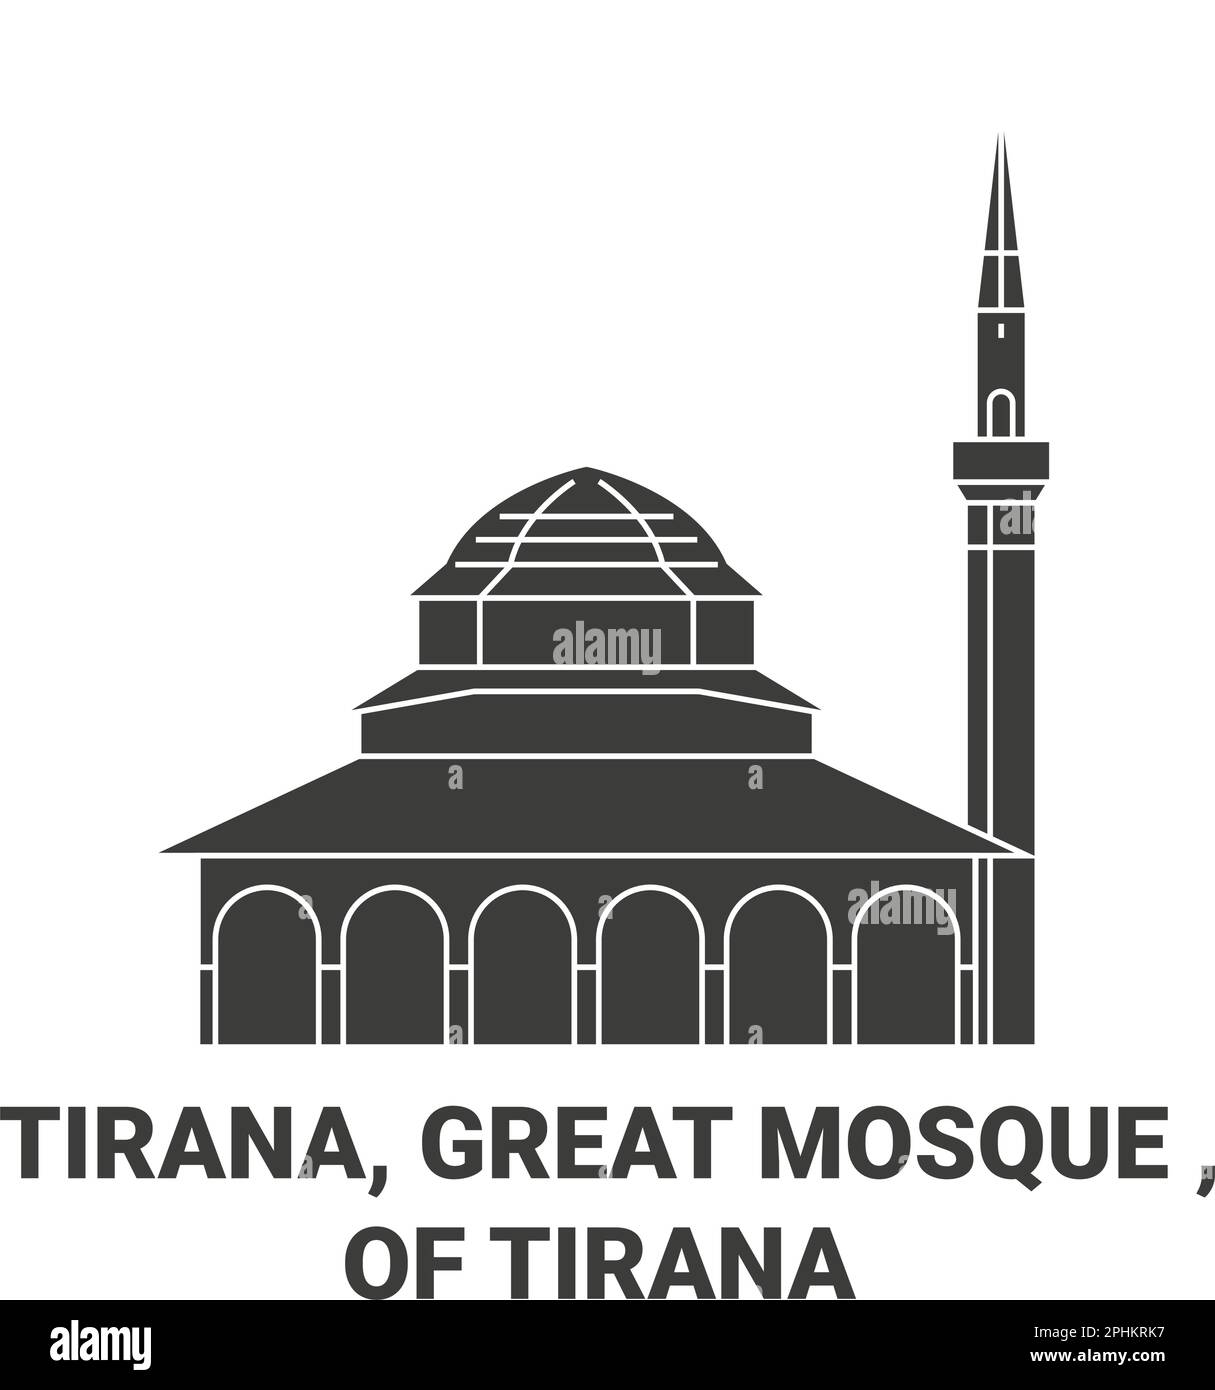 Albanie, Tirana, Grande Mosquée , de Tirana Voyage illustration vecteur Illustration de Vecteur